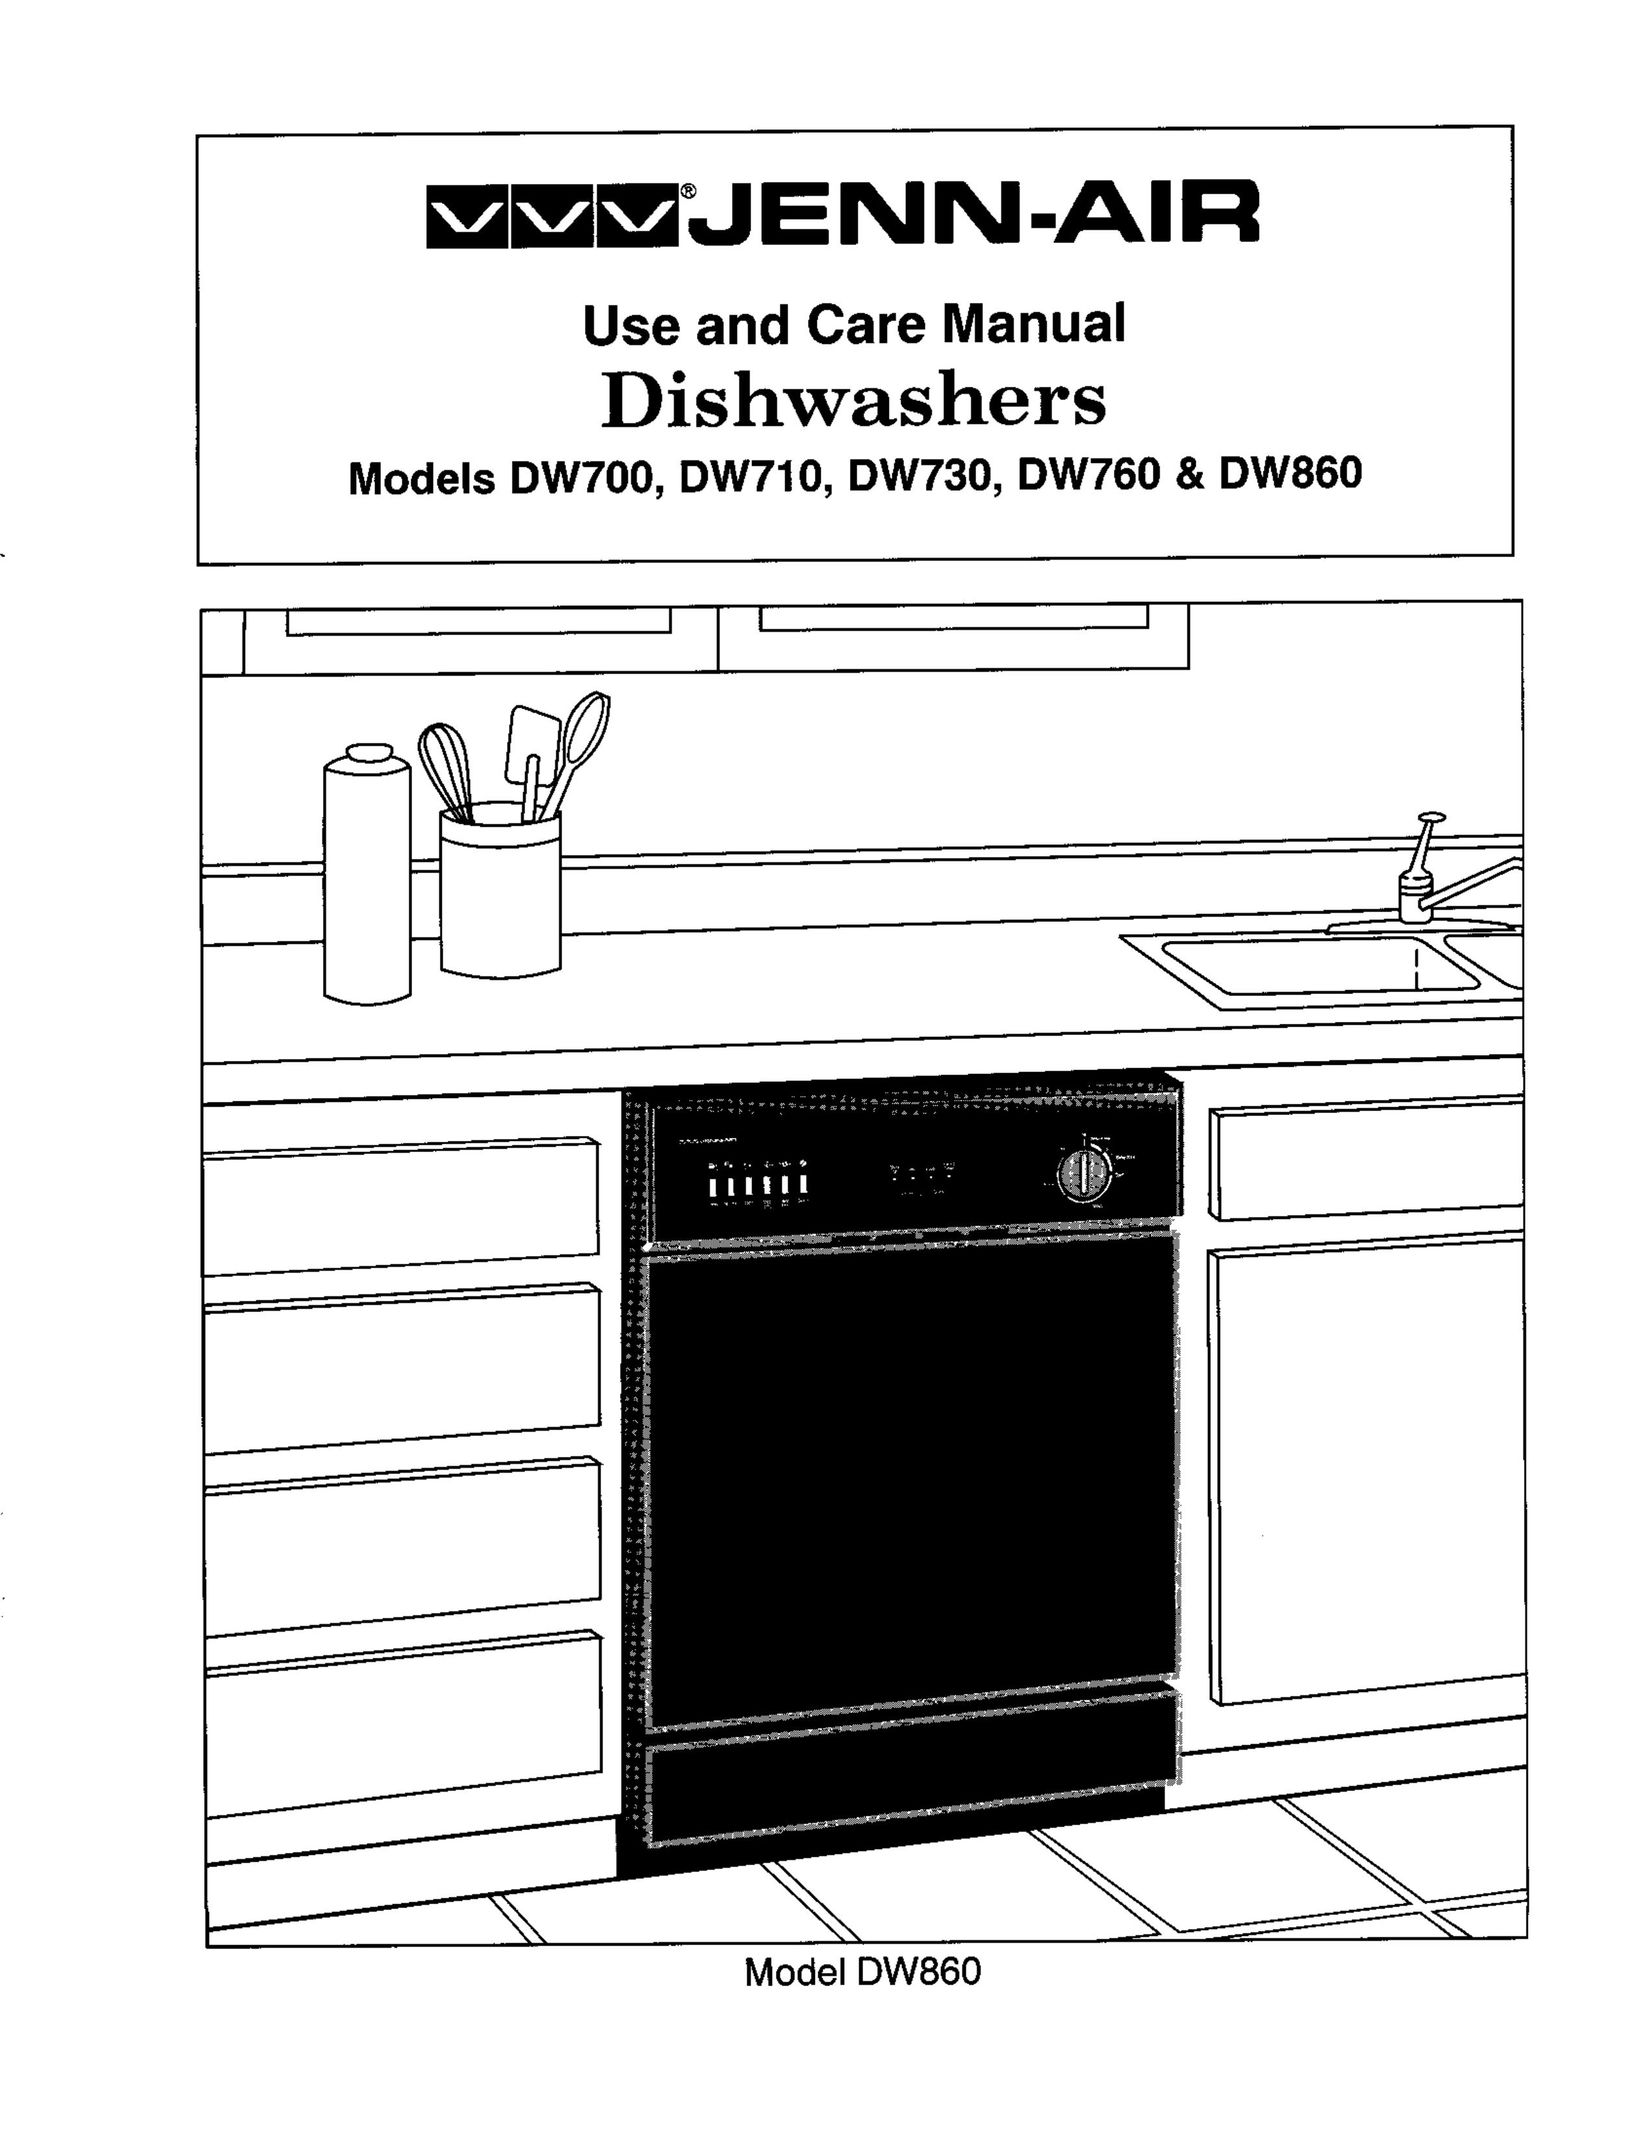 Jenn-Air DW860 Dishwasher User Manual